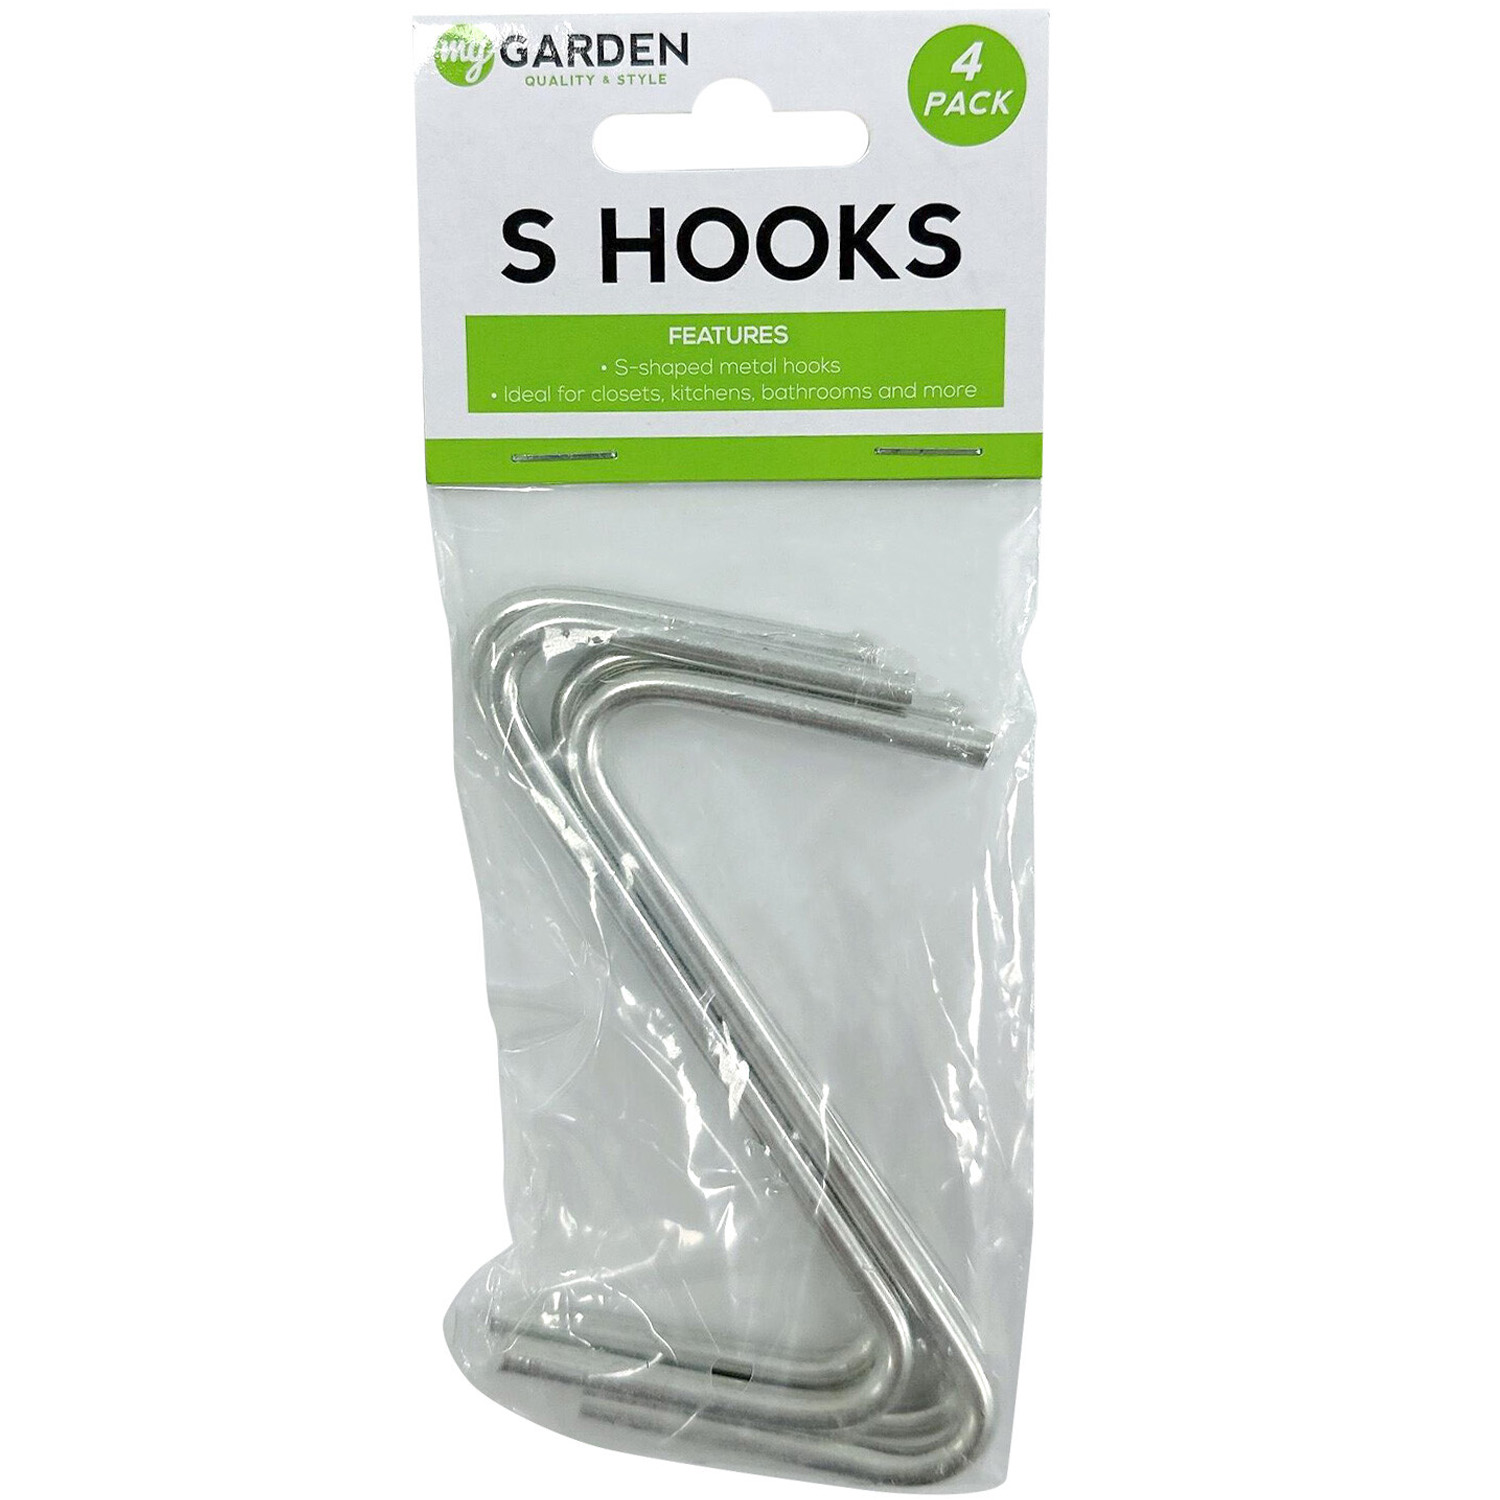 My Garden Silver S Hooks 4 Pack Image